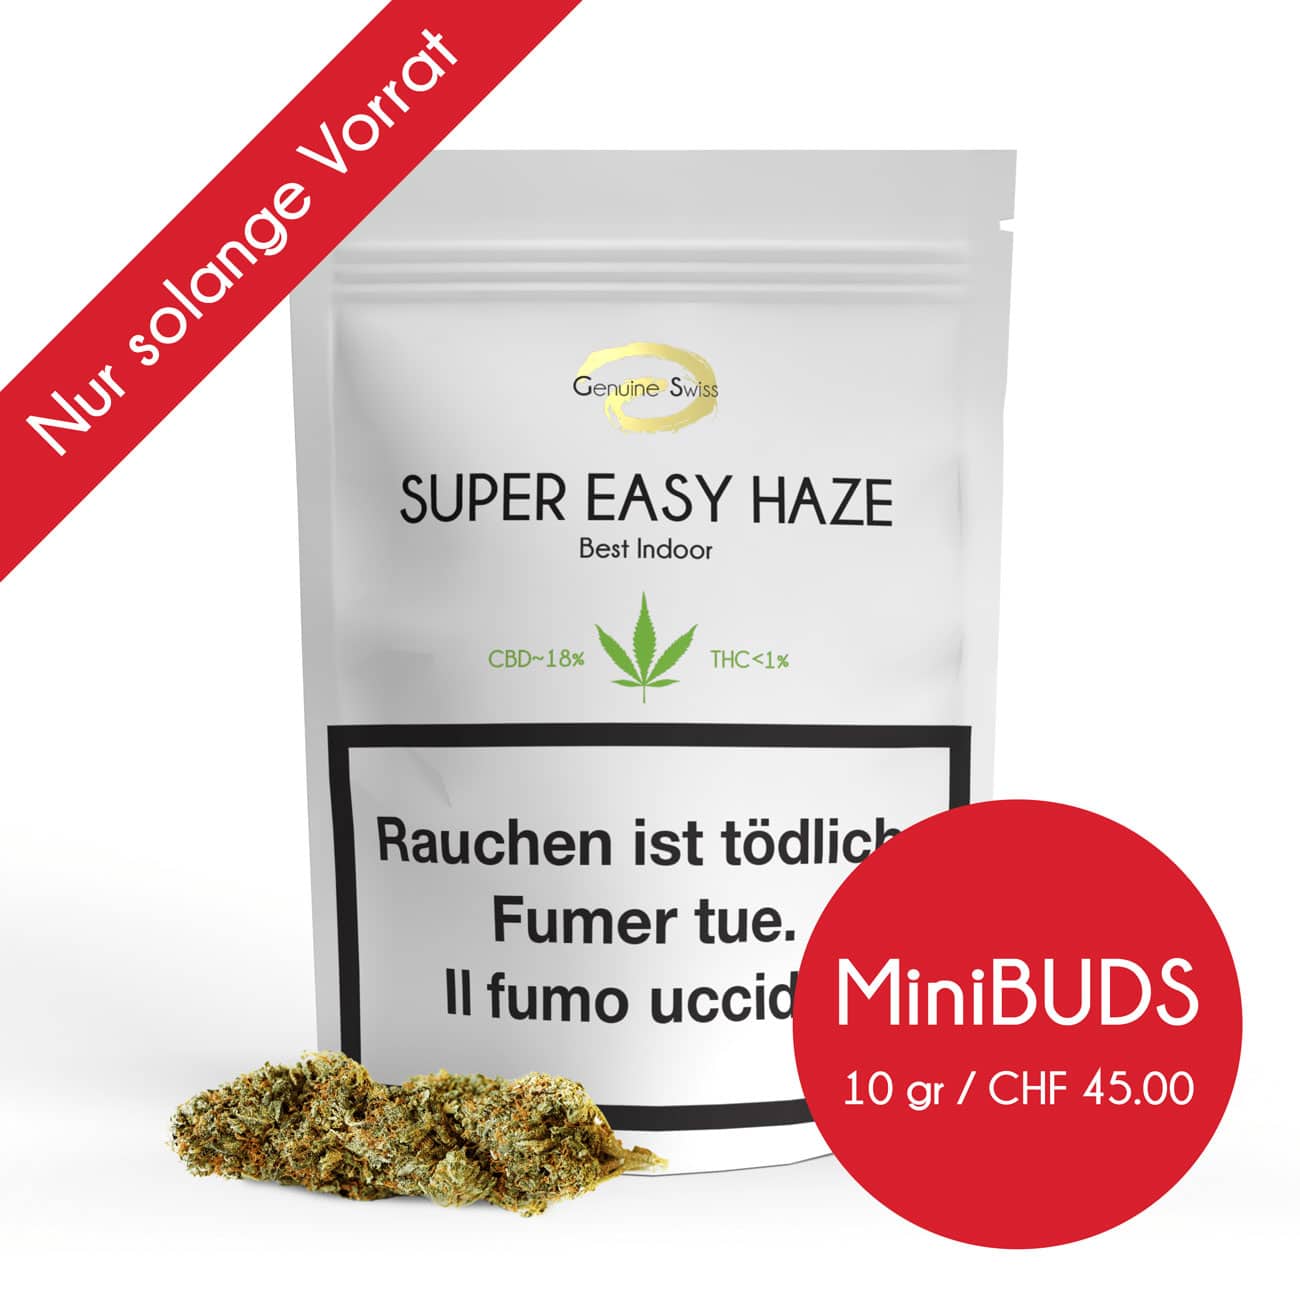 Genuine Swiss Super Easy Haze Minibuds • Small CBD Buds Indoor